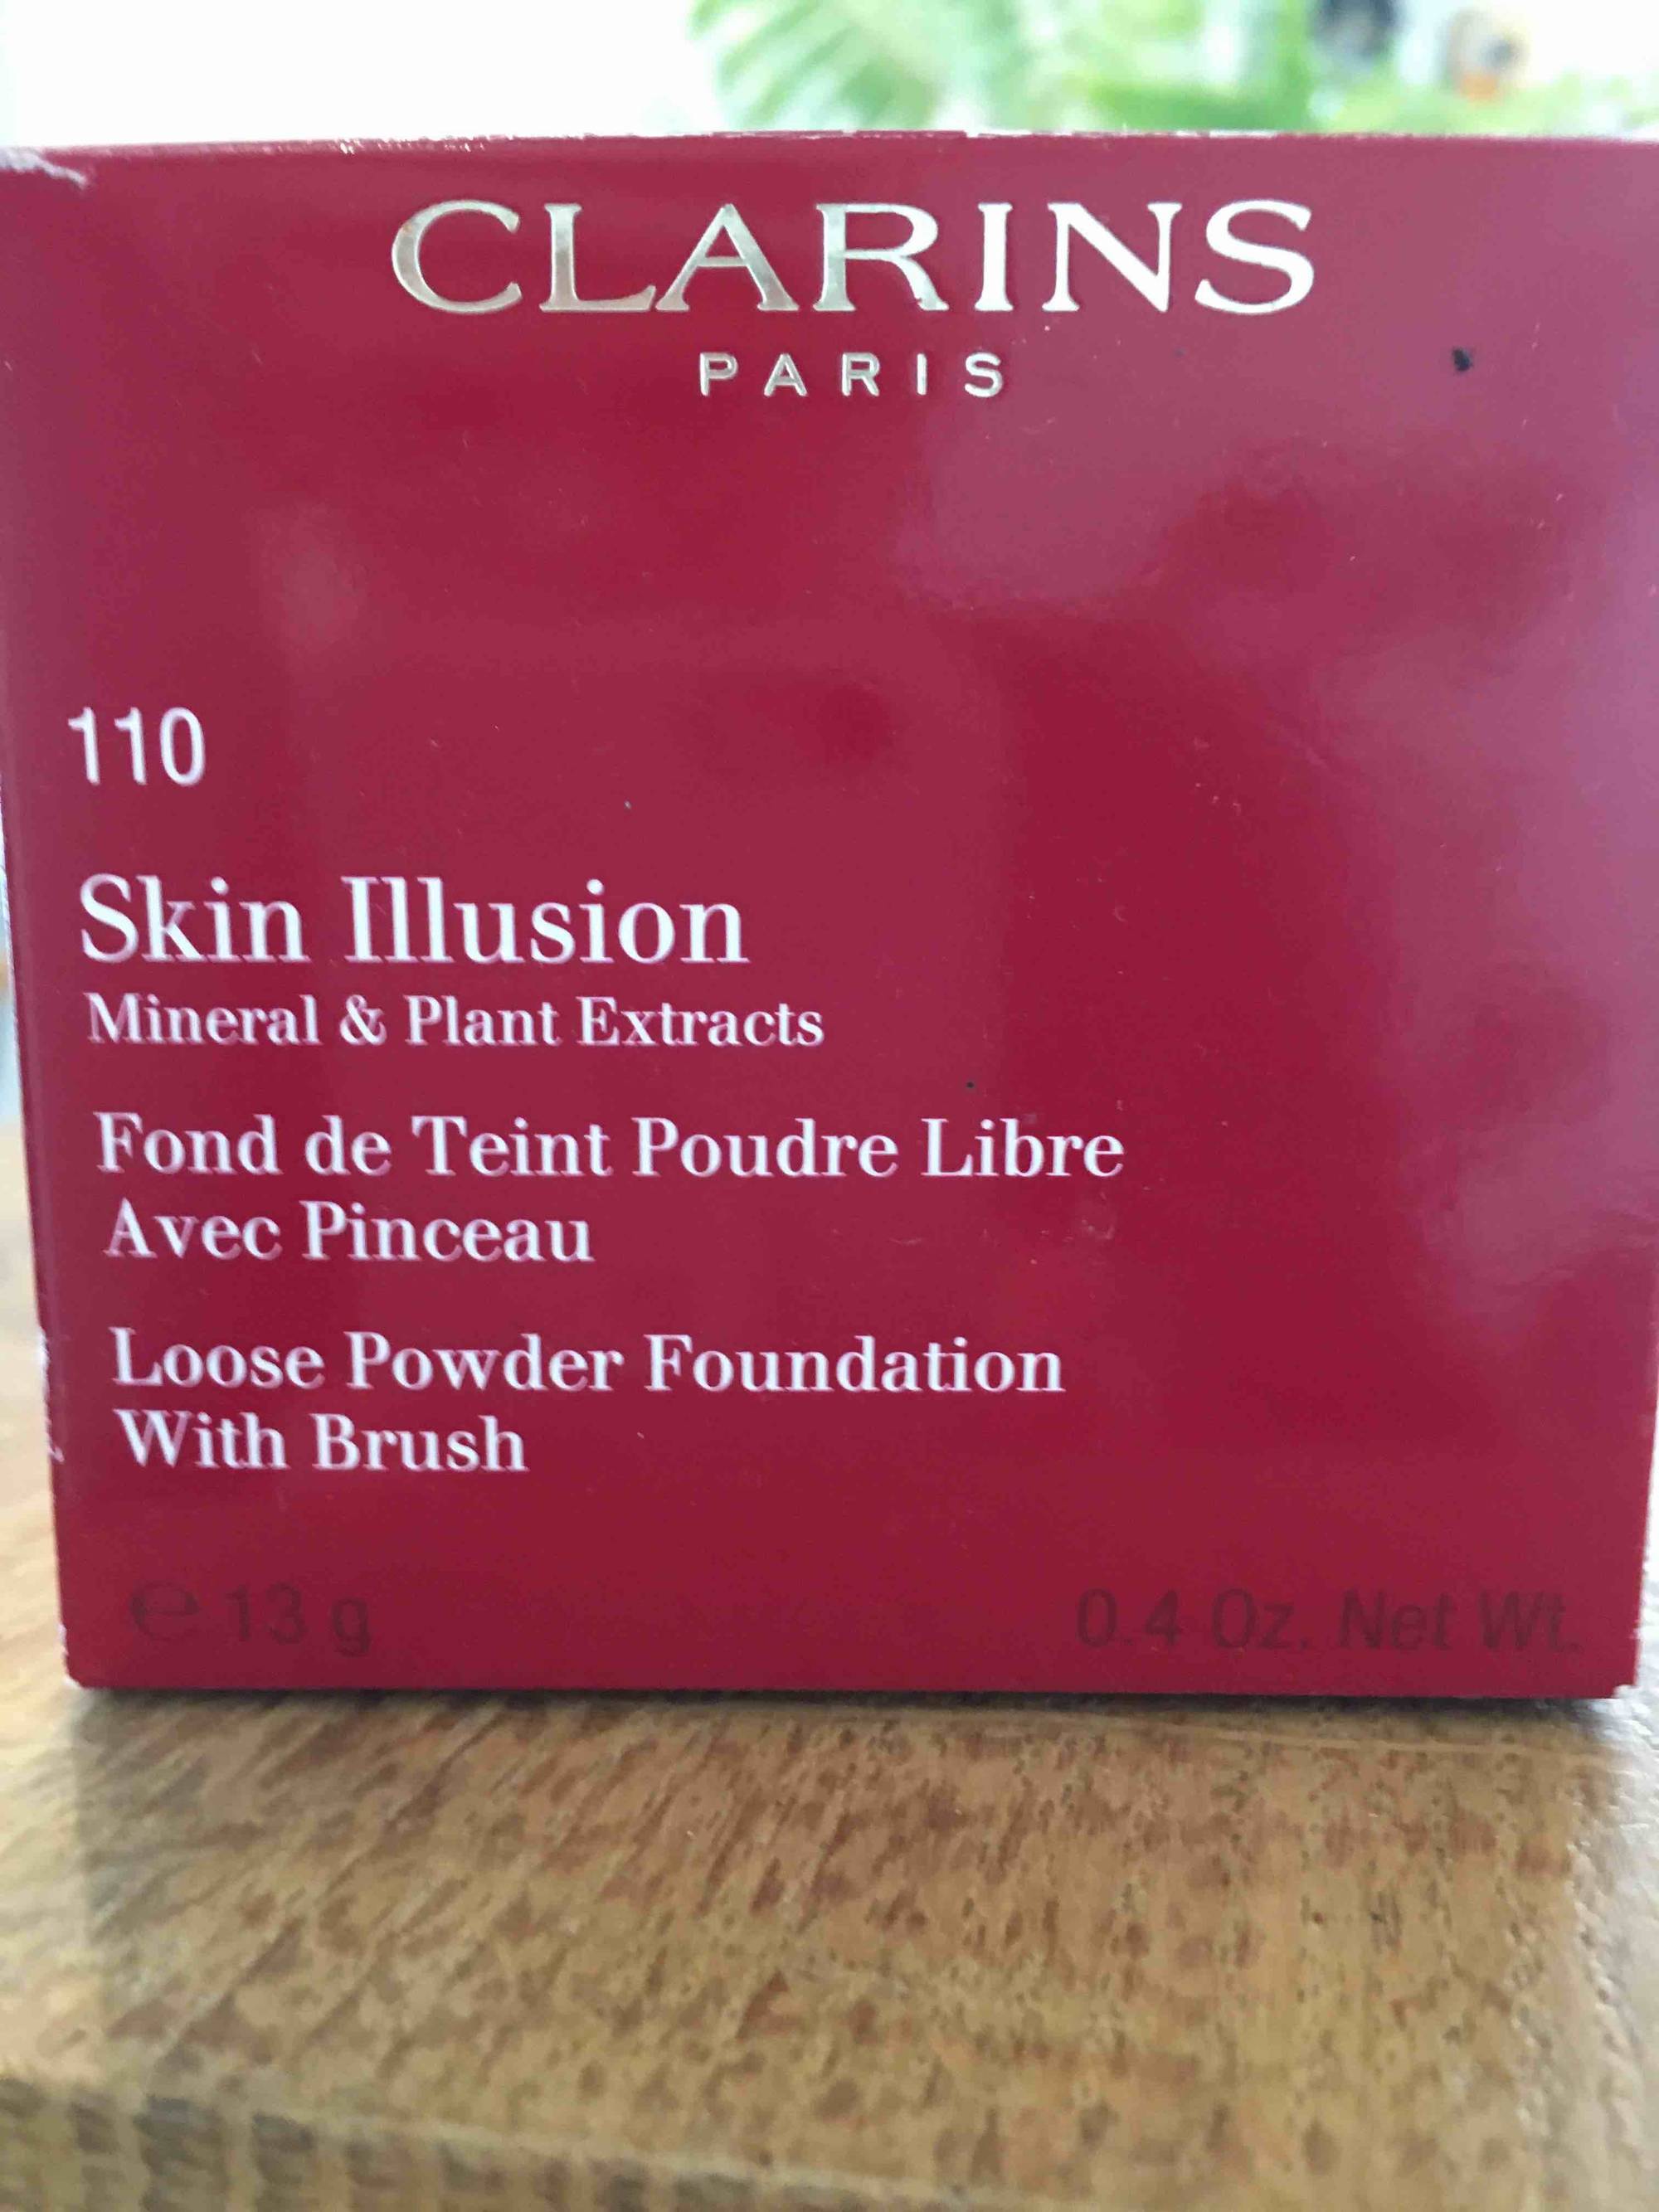 CLARINS - Skin illusion  - Fond de teint poudre libre 110